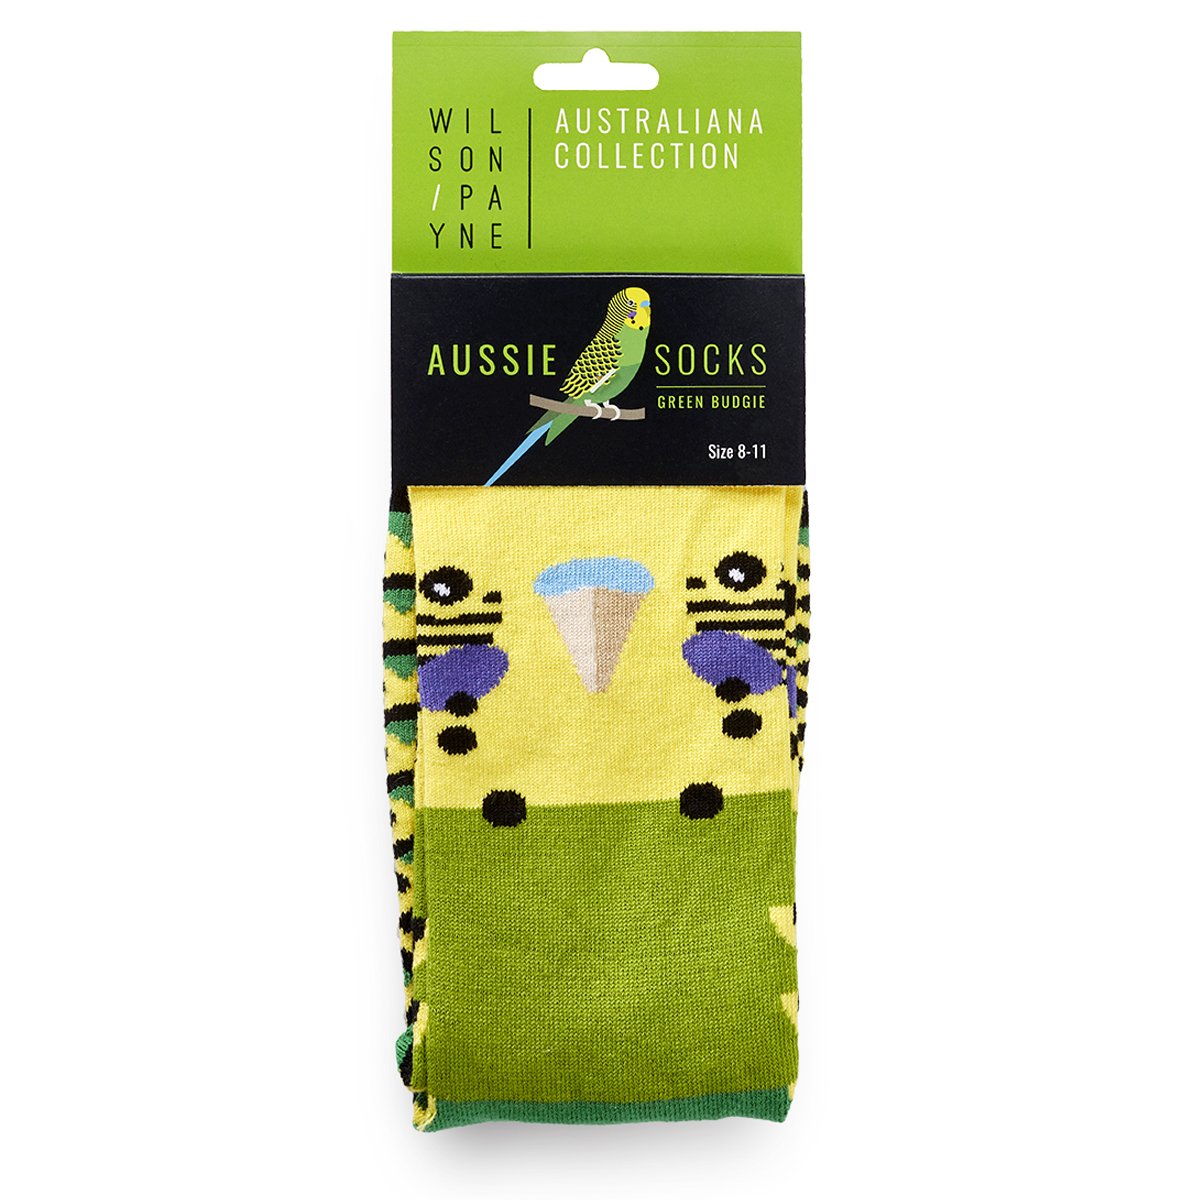 Green budgie socks in packaging - The Sockery